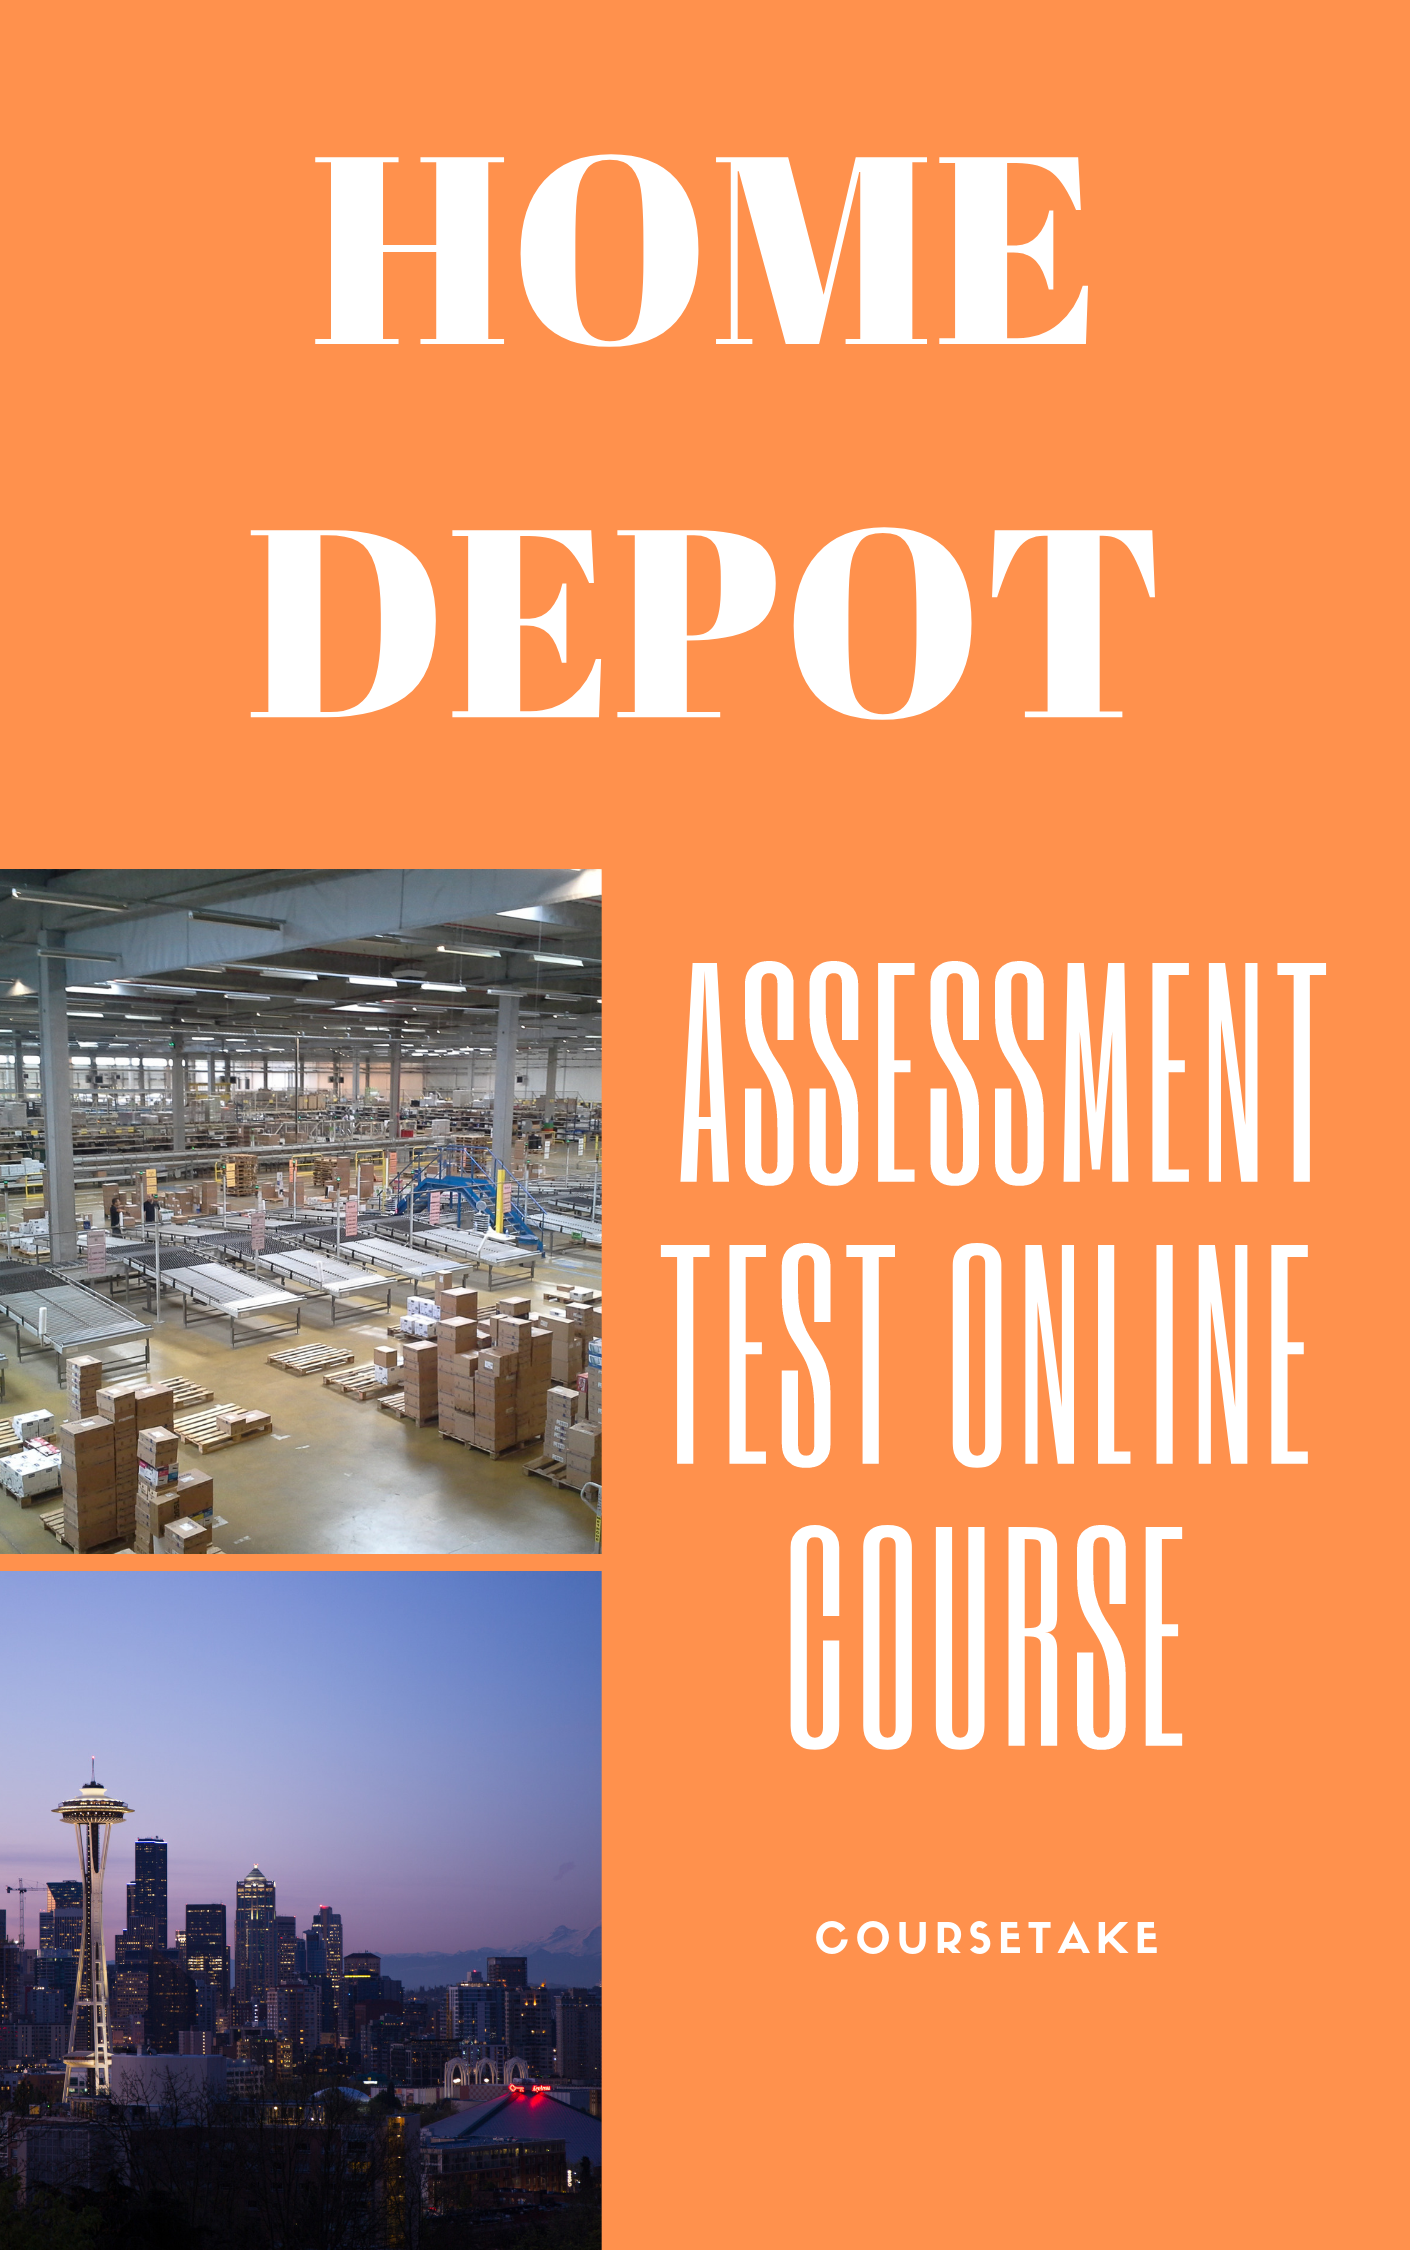 Home Depot Assessment Test Online Course